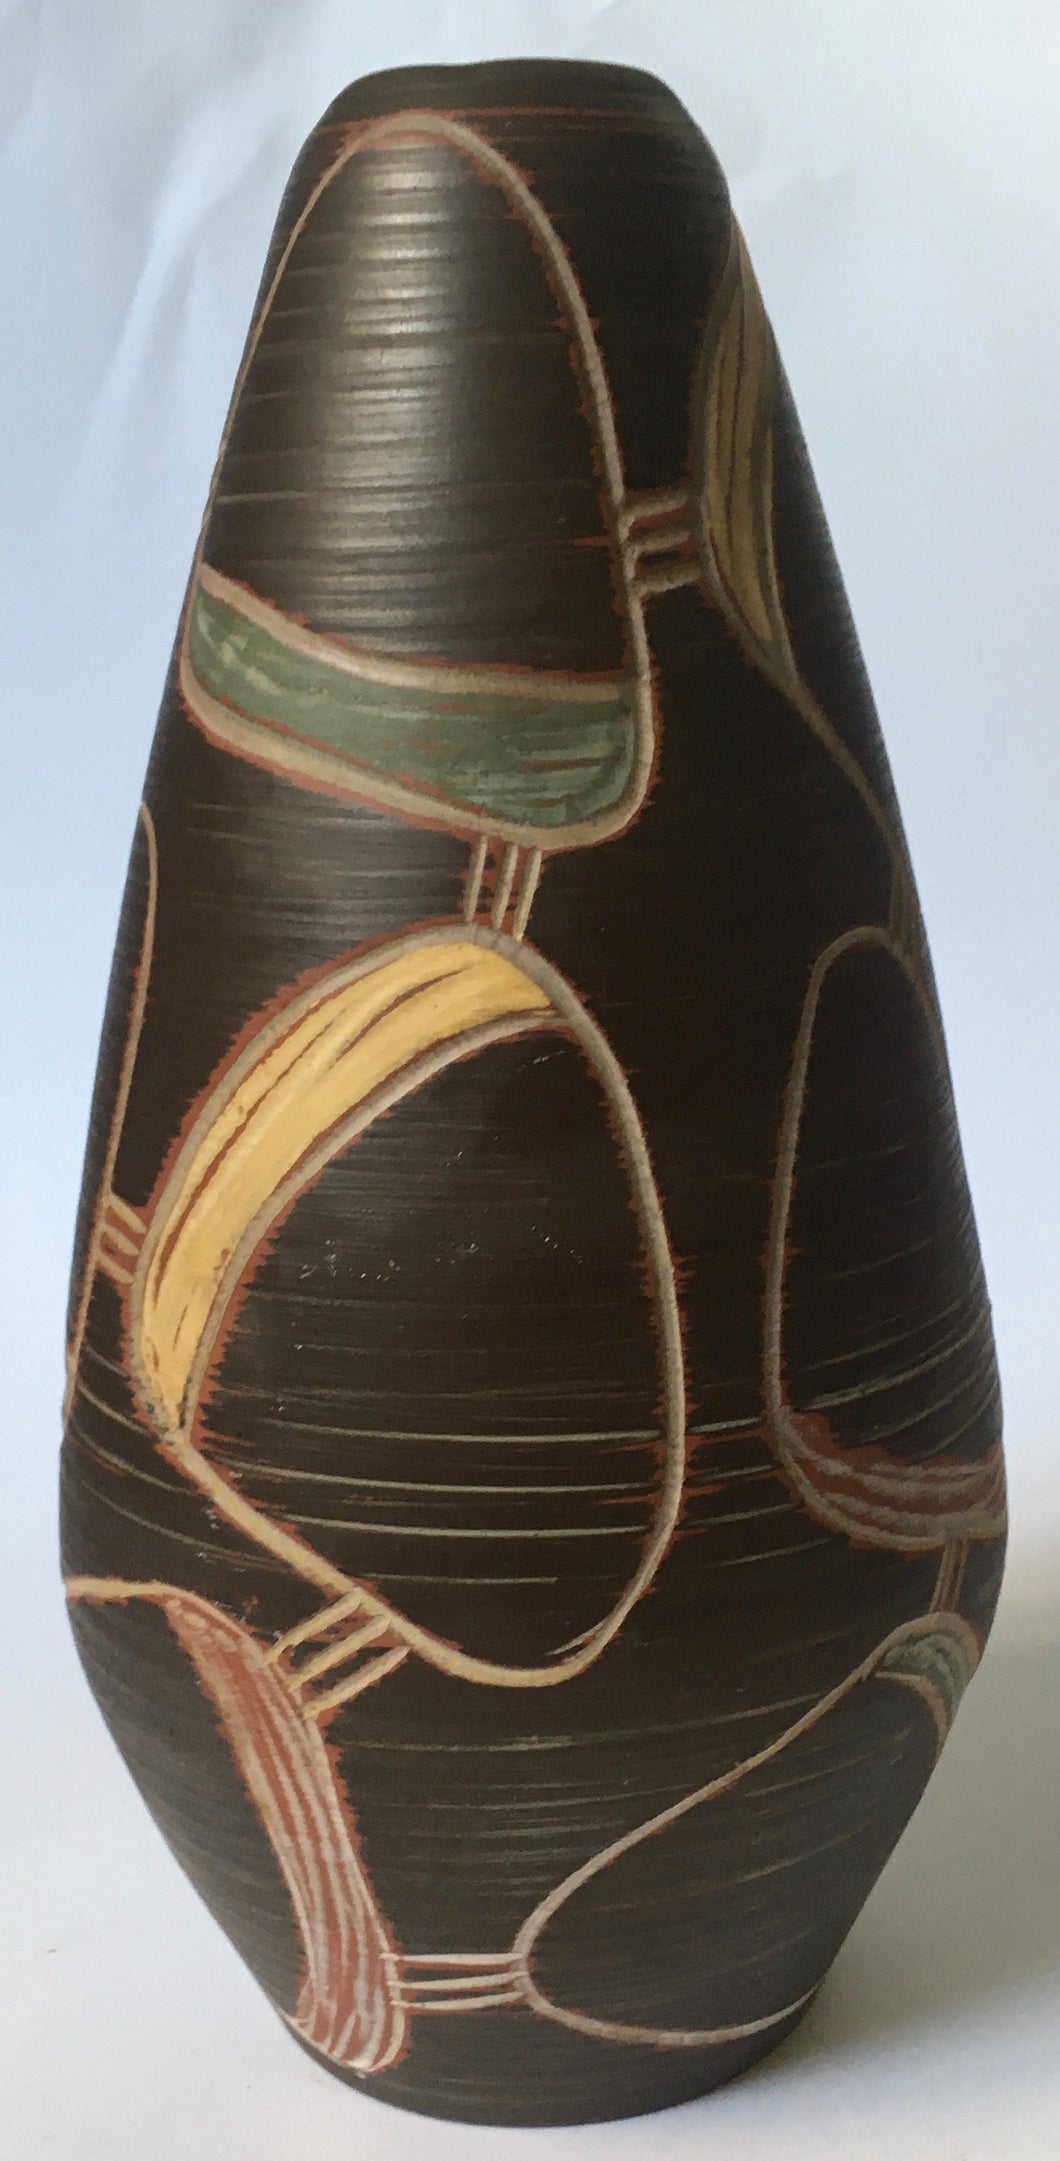 Sawa Keramik ceramic Vase 230/25 1960s 'Torino' decoration by FRANZ SCHWADERLAPP West German, Germany